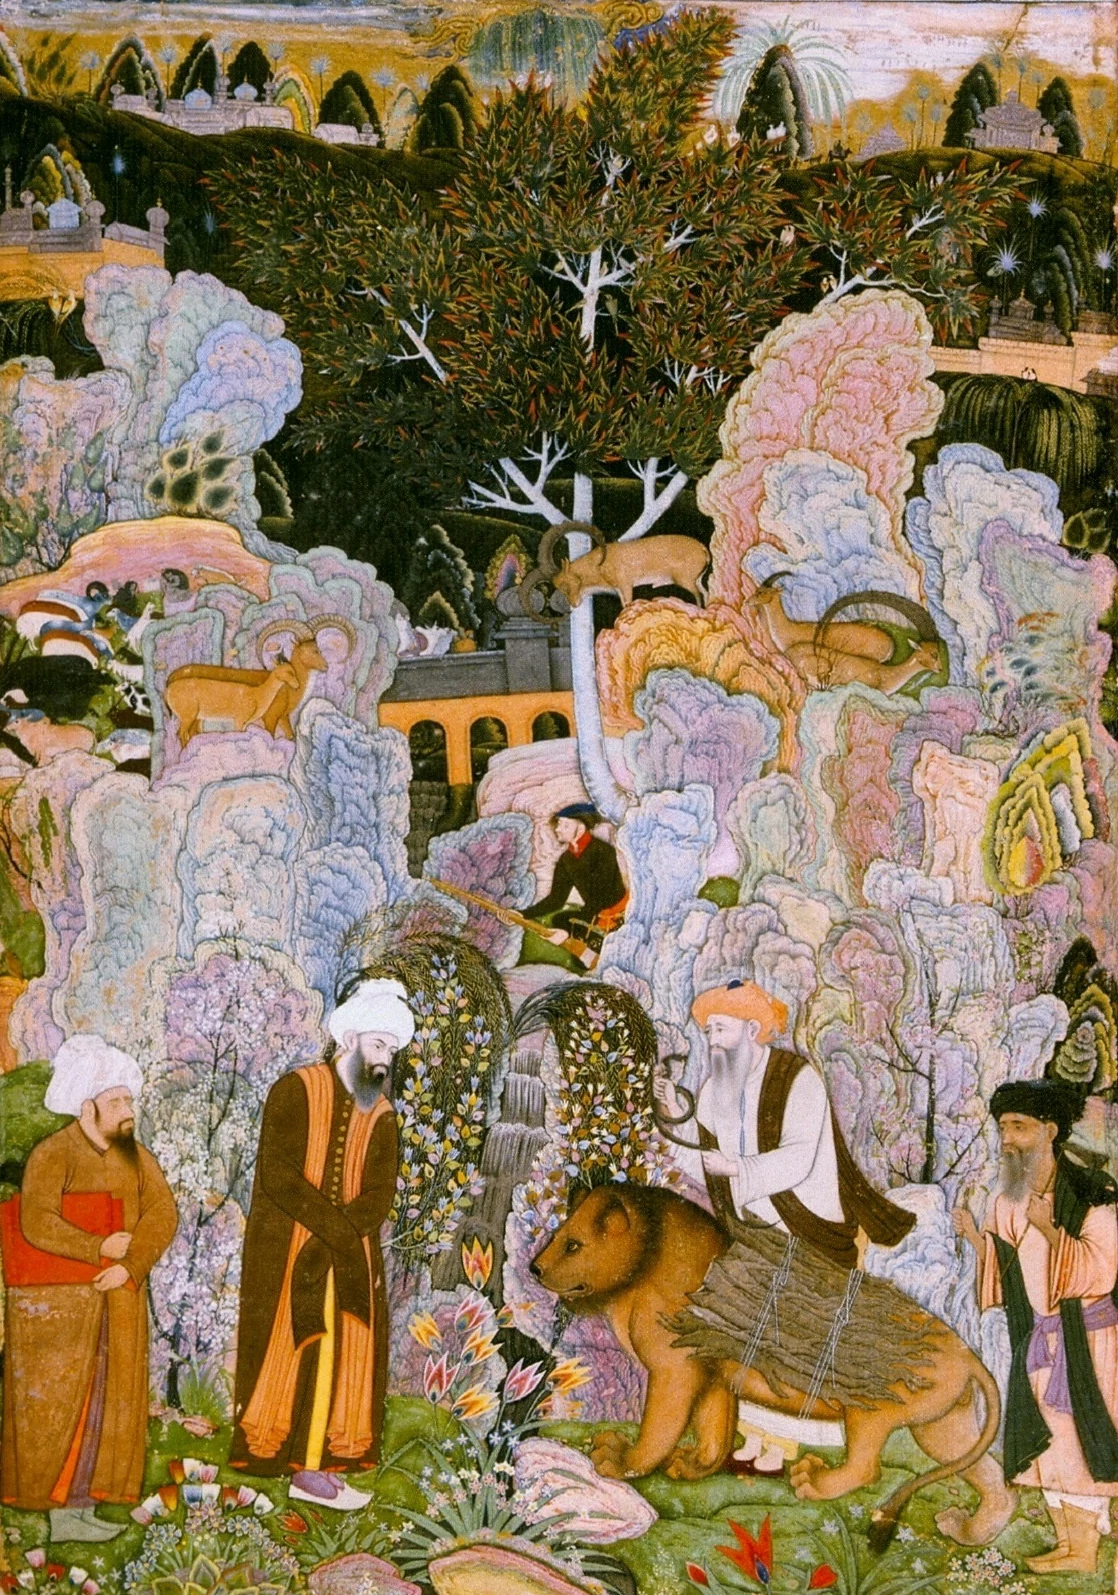 Sufis in a Landscape, Farrukh Beg